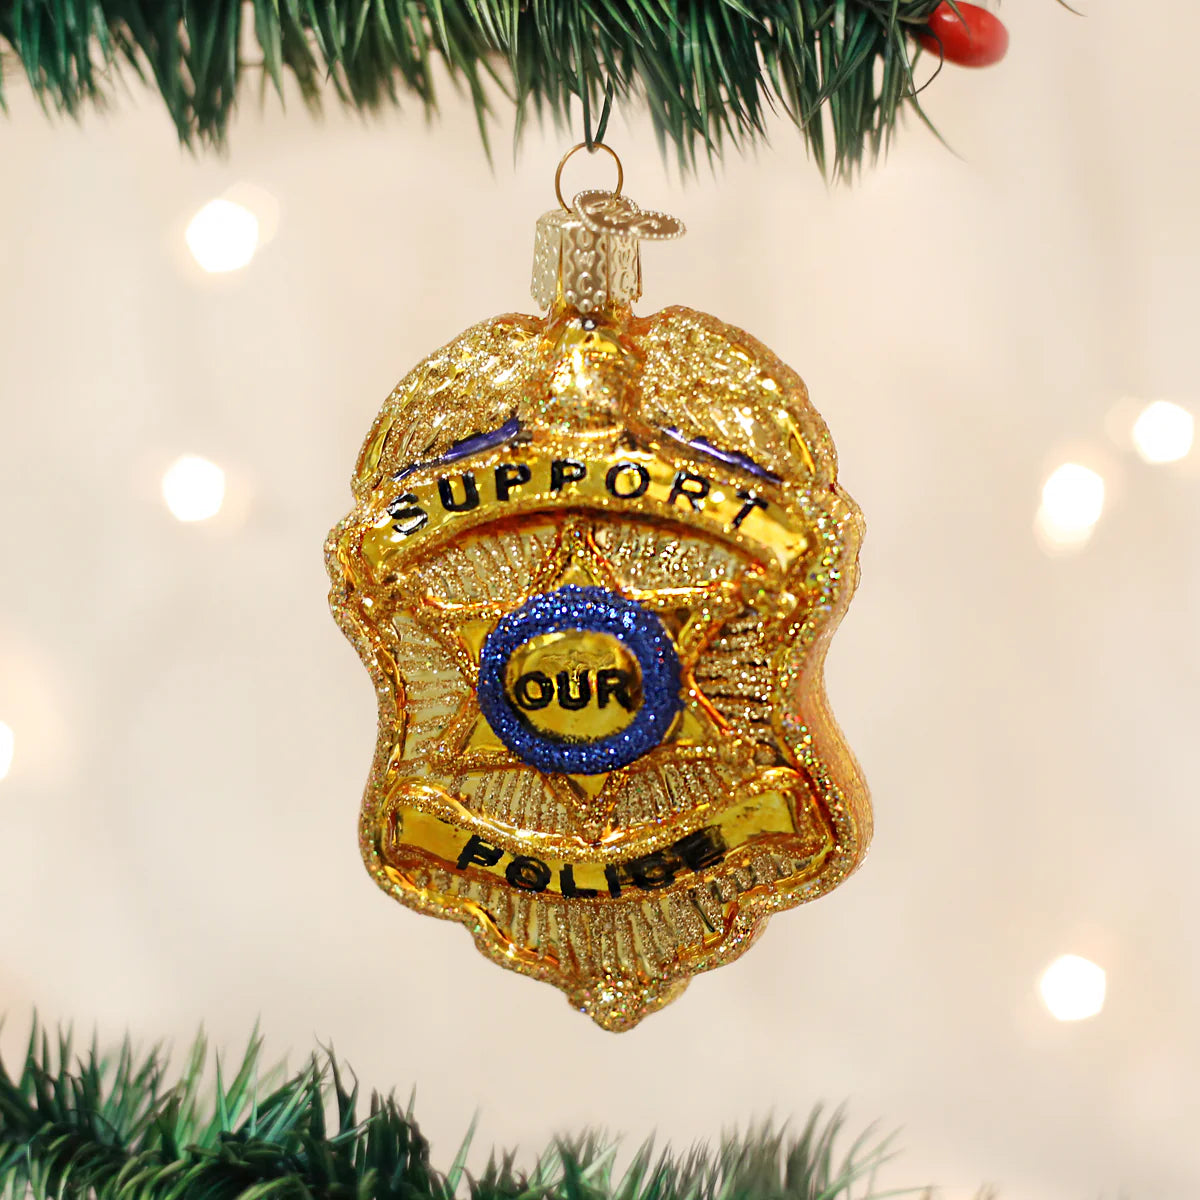 Old World Christmas - Police Badge Ornament